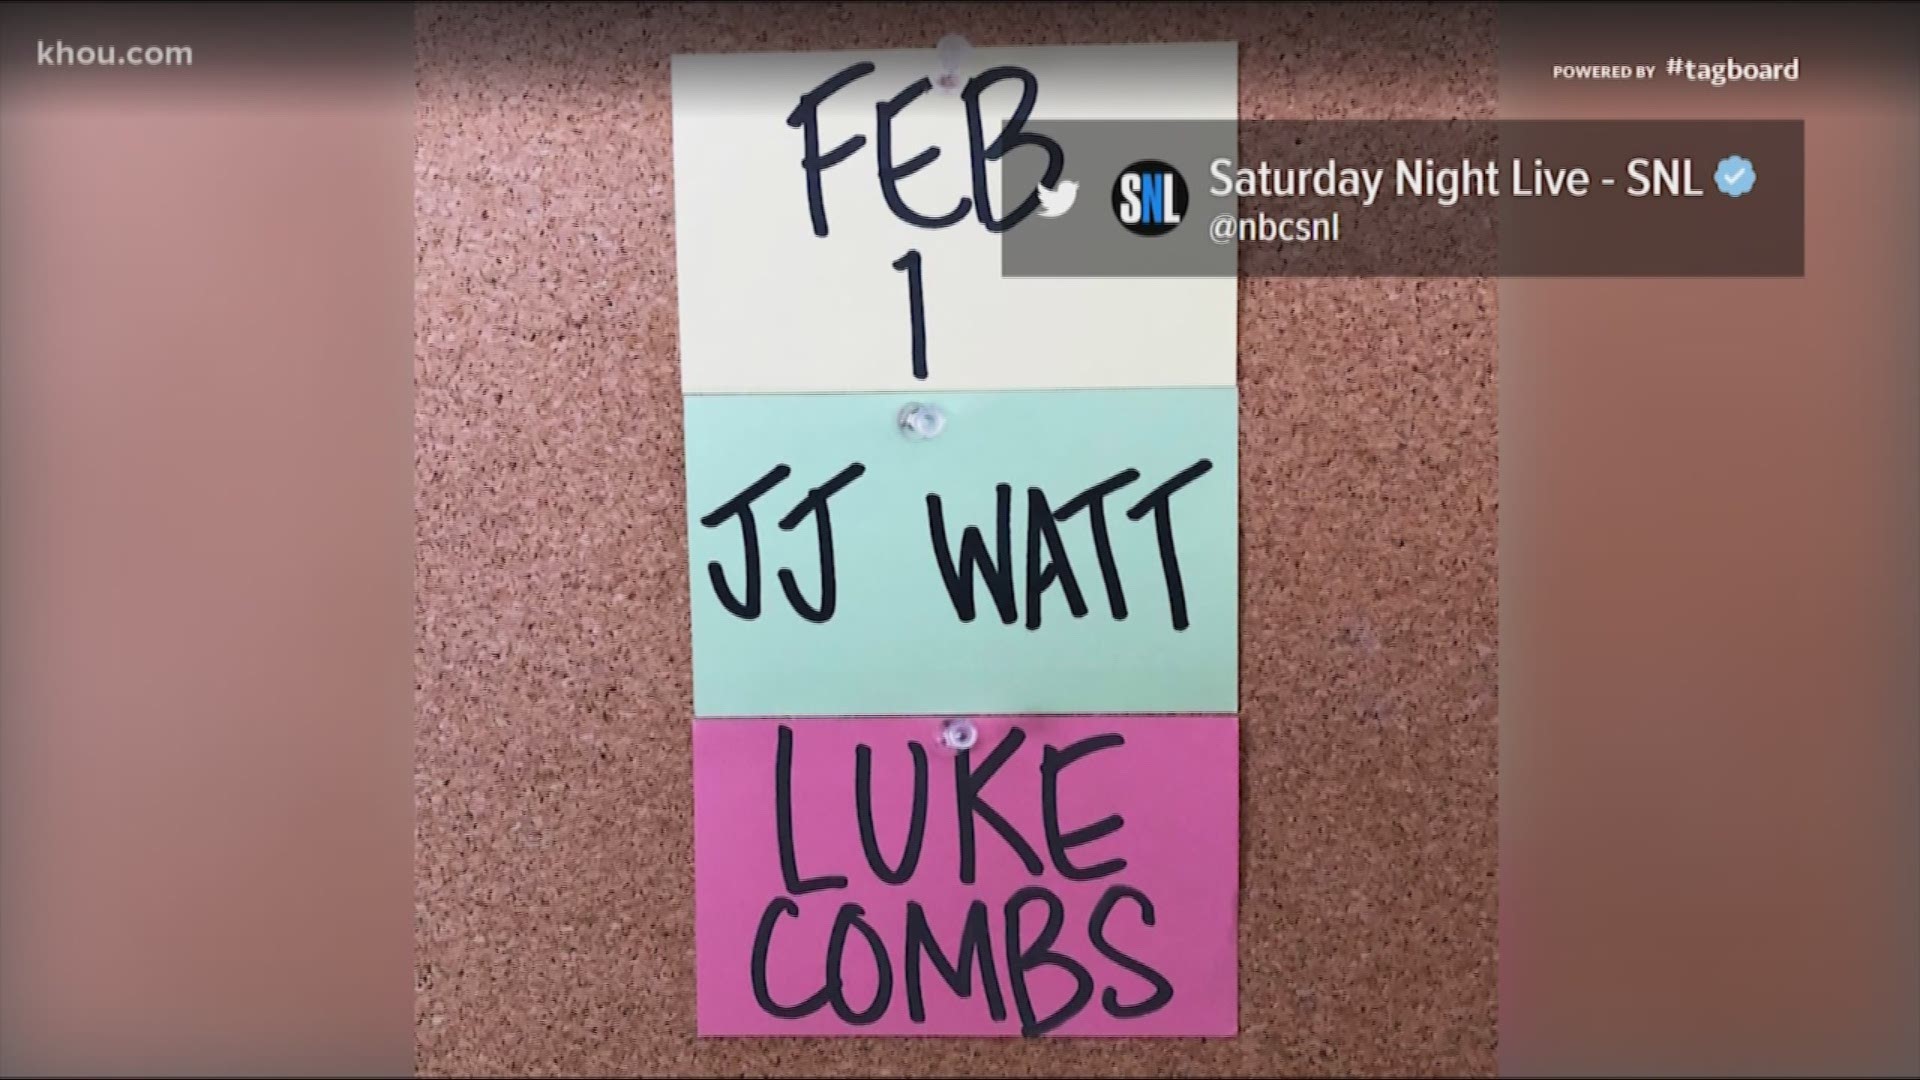 J.J. Watt will host SNL on Super Bowl weekend with Luke Combs as the musical guest.